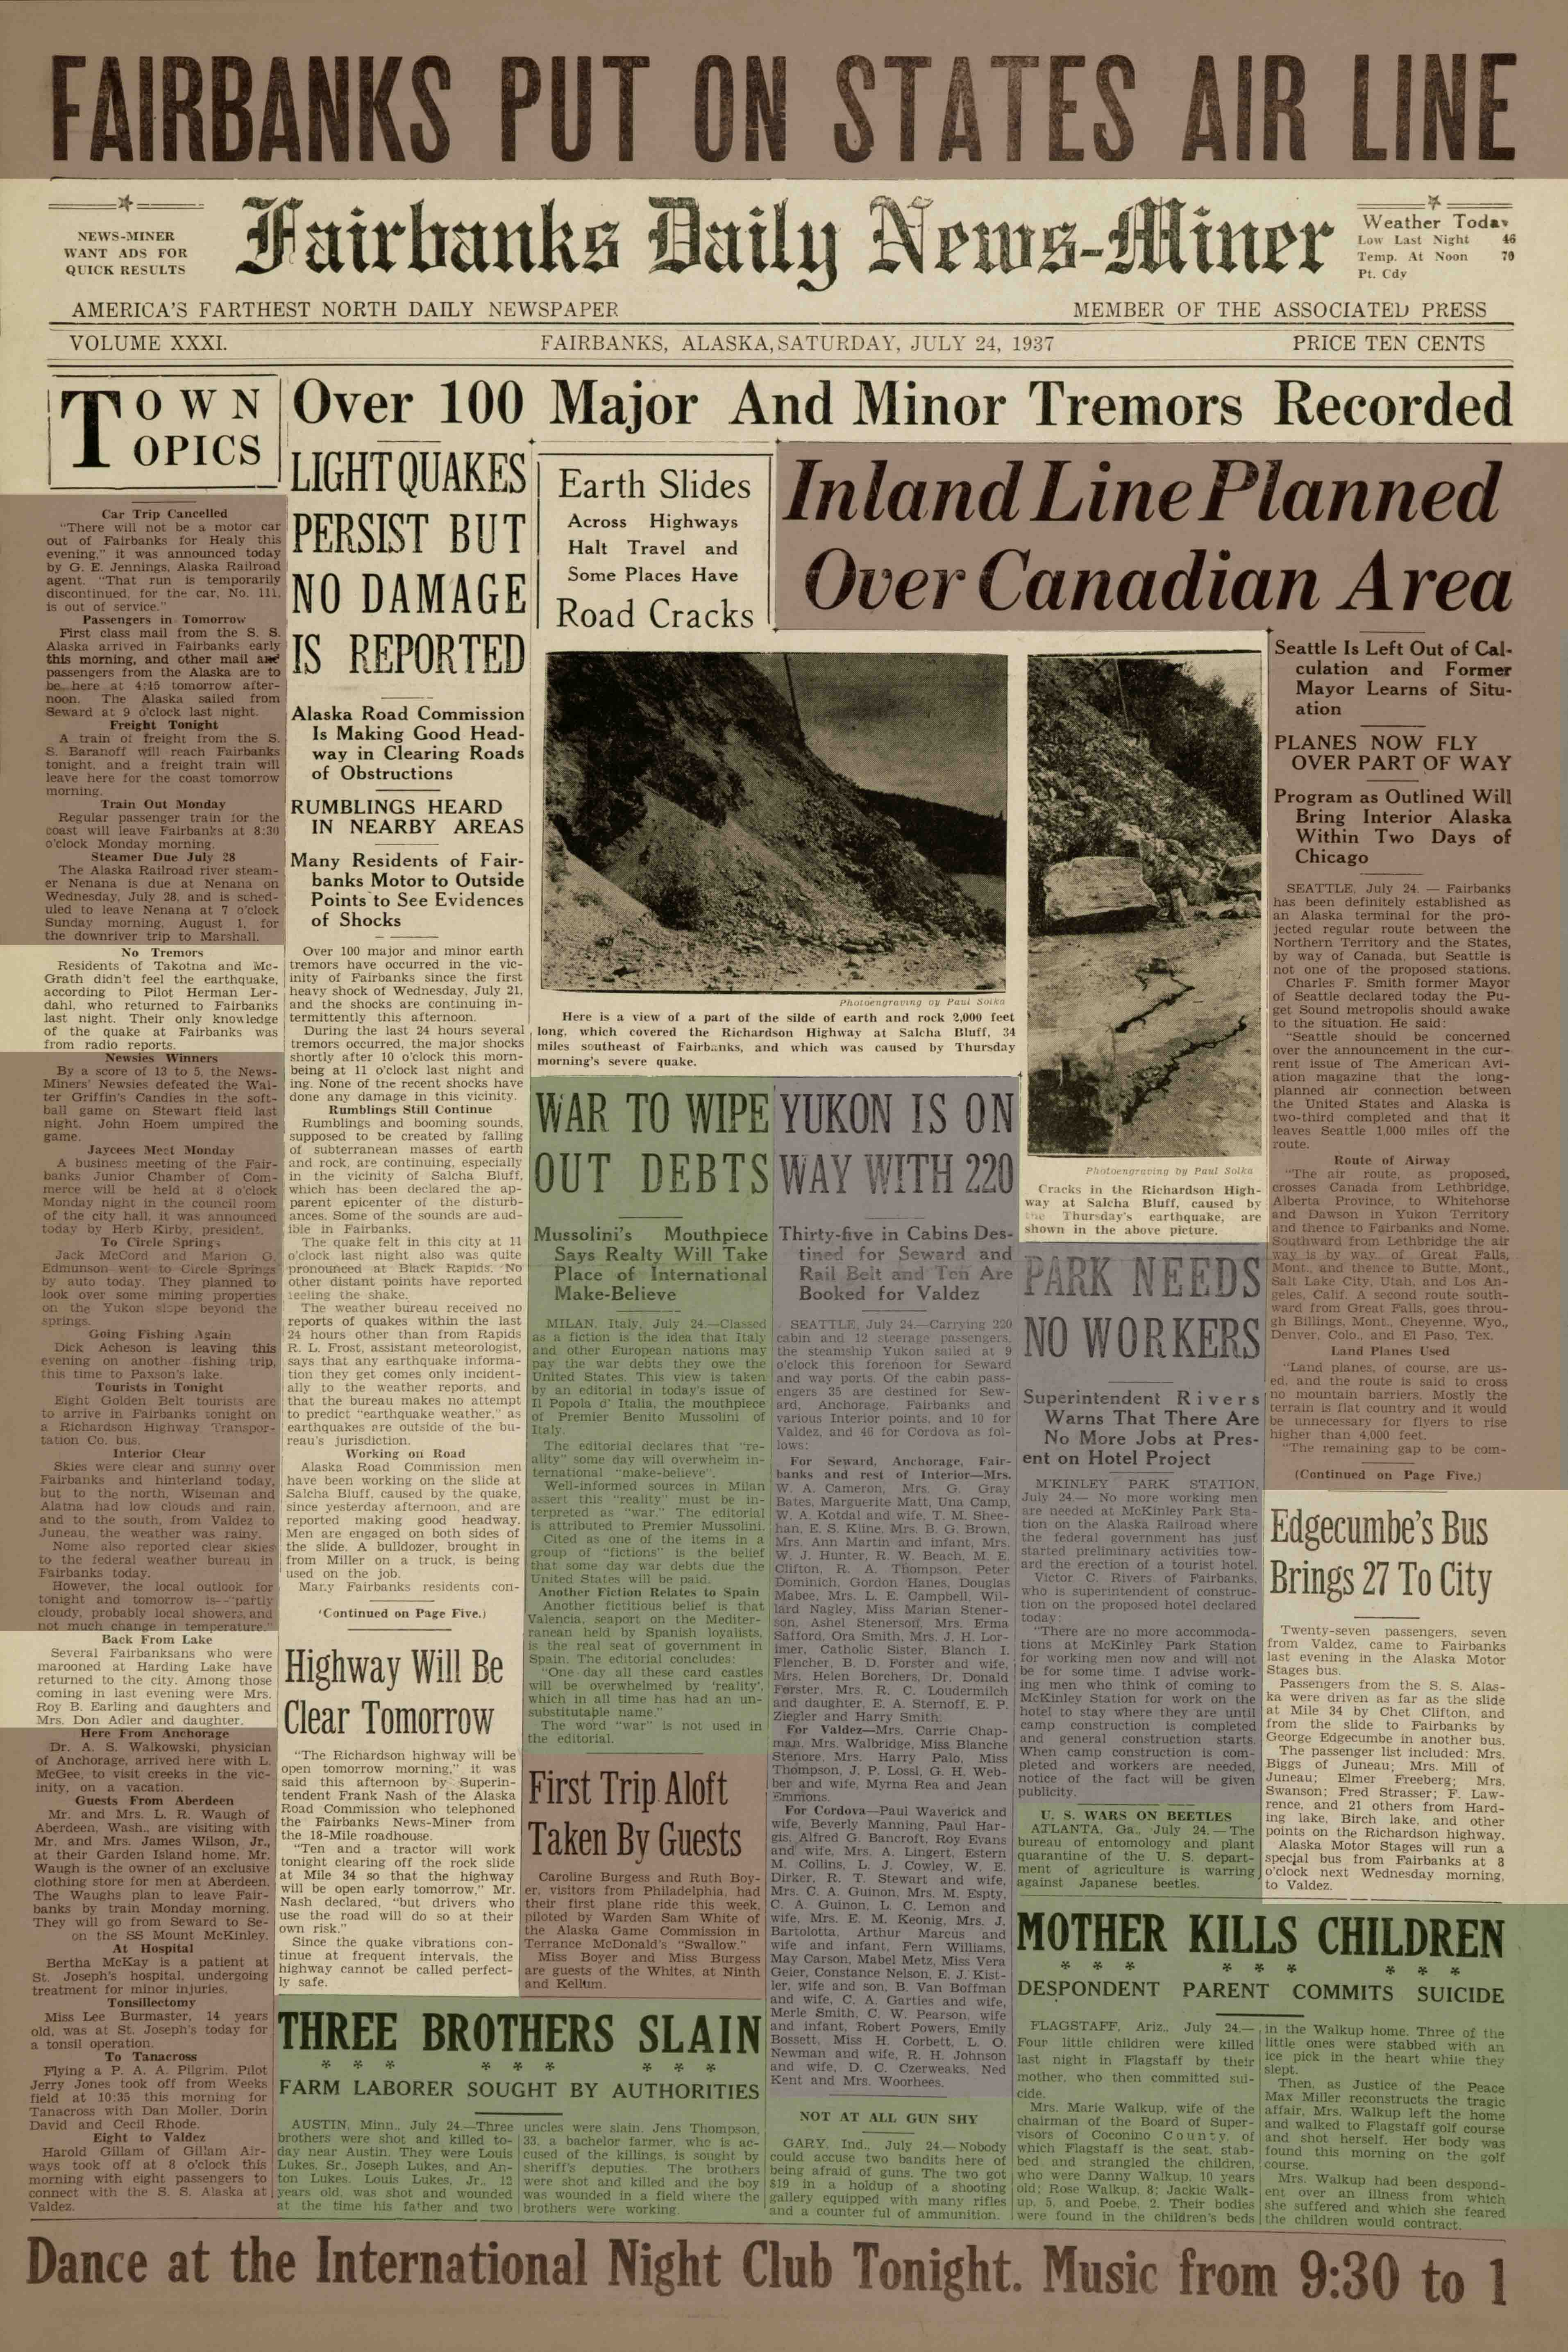 1937 July 24, Fairbanks Daily News-Miner (pg 1)